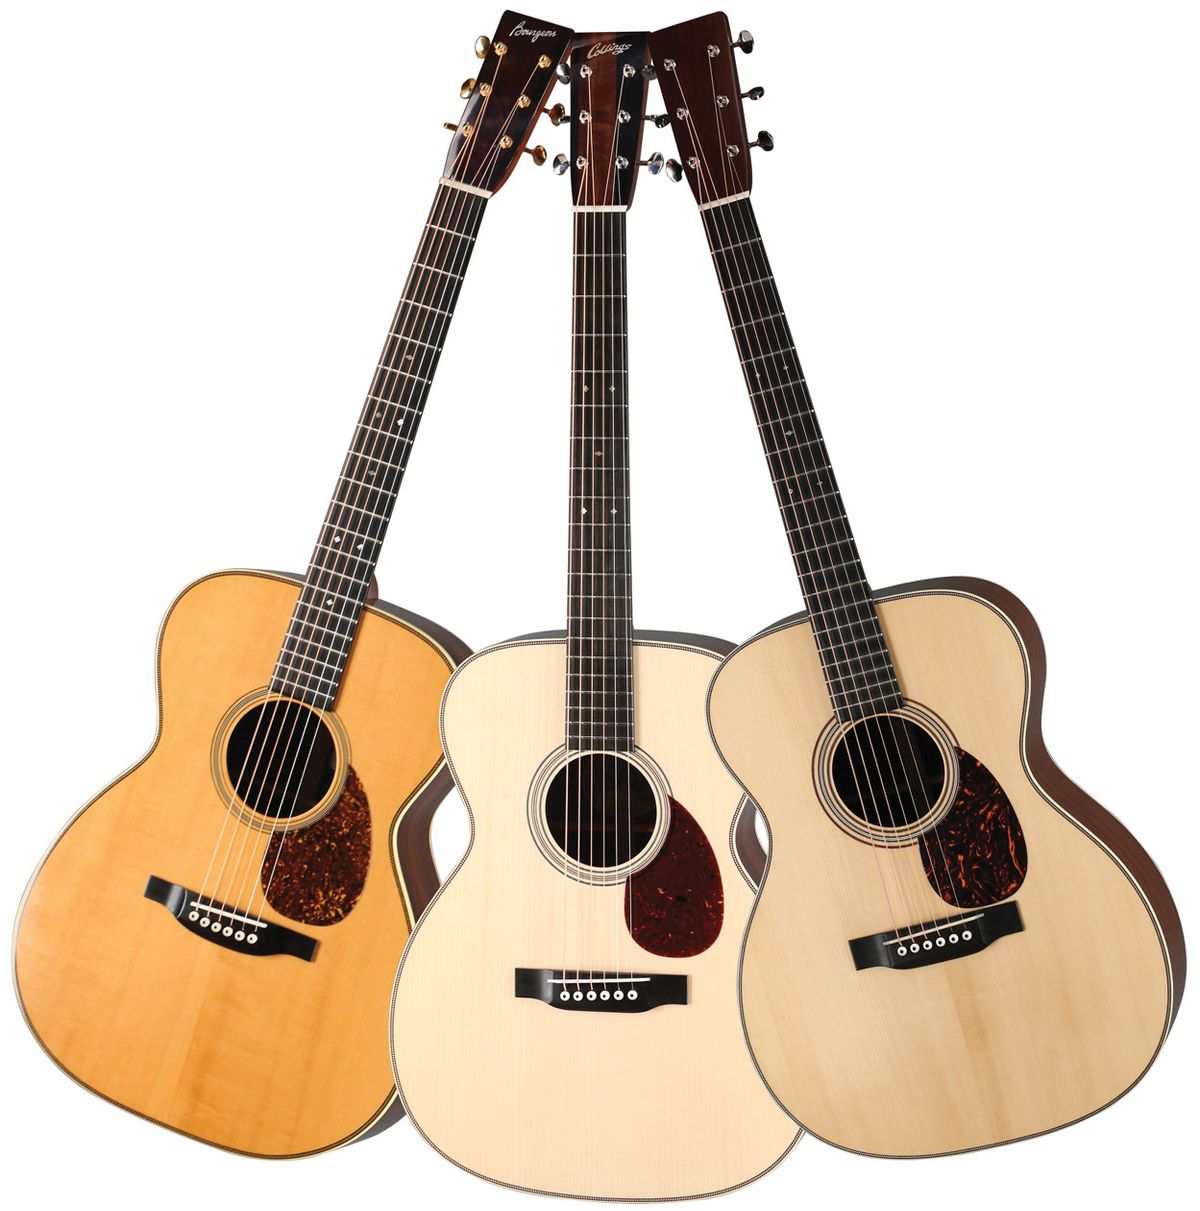 Acoustic Soundboard: Why We Buy Multiple Guitars